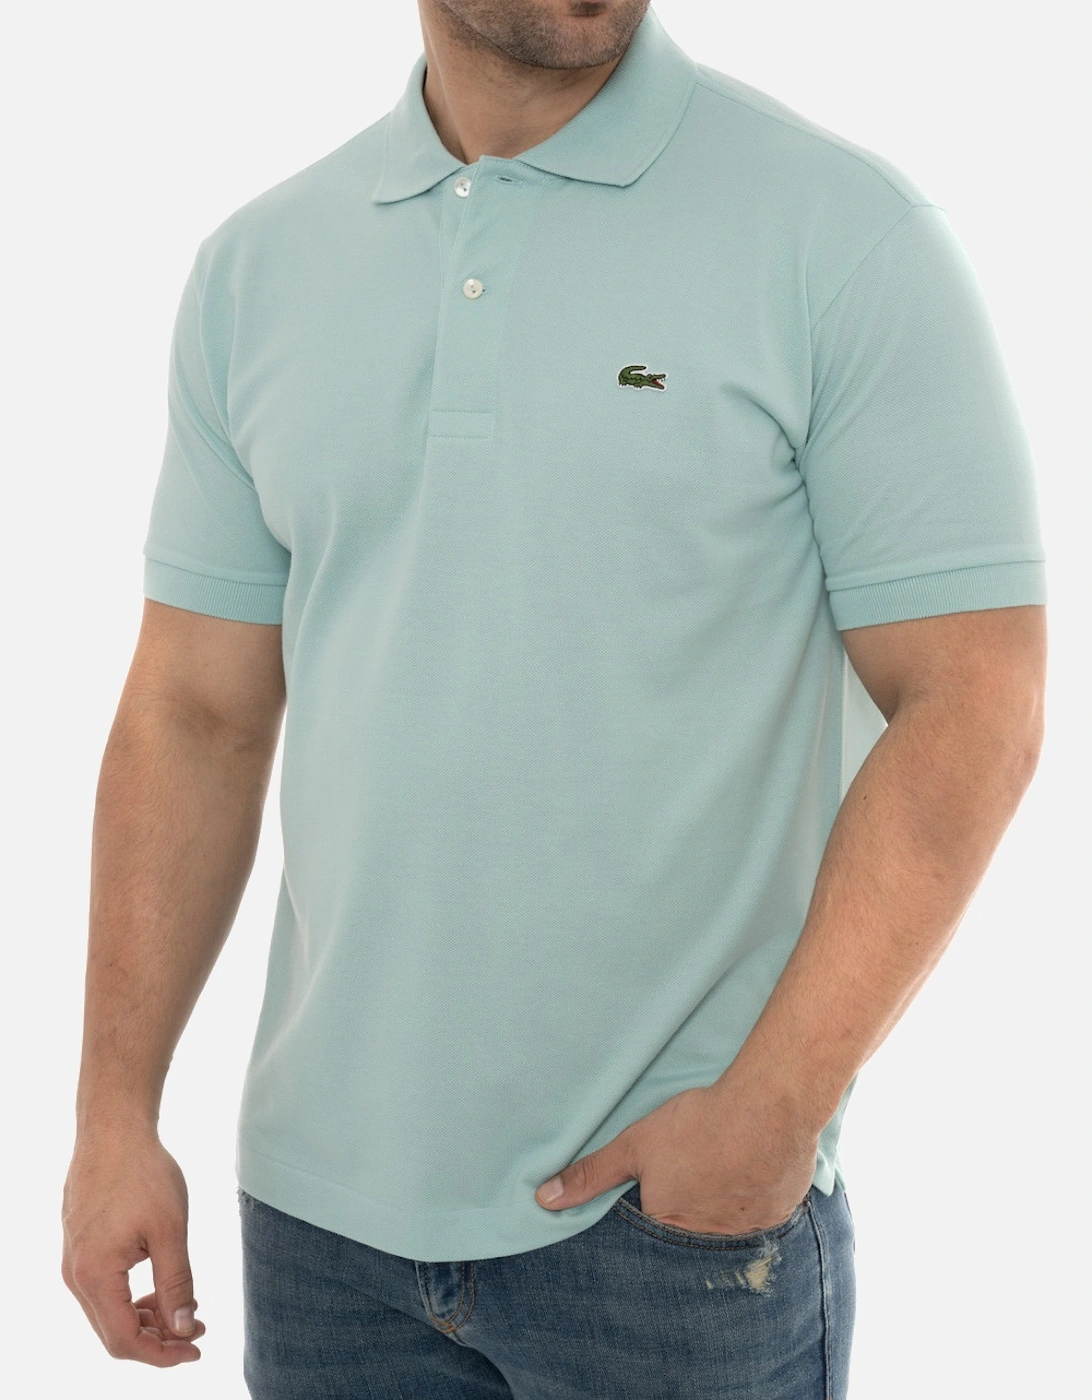 Mens Short Sleeve Polo Shirt (Mint)